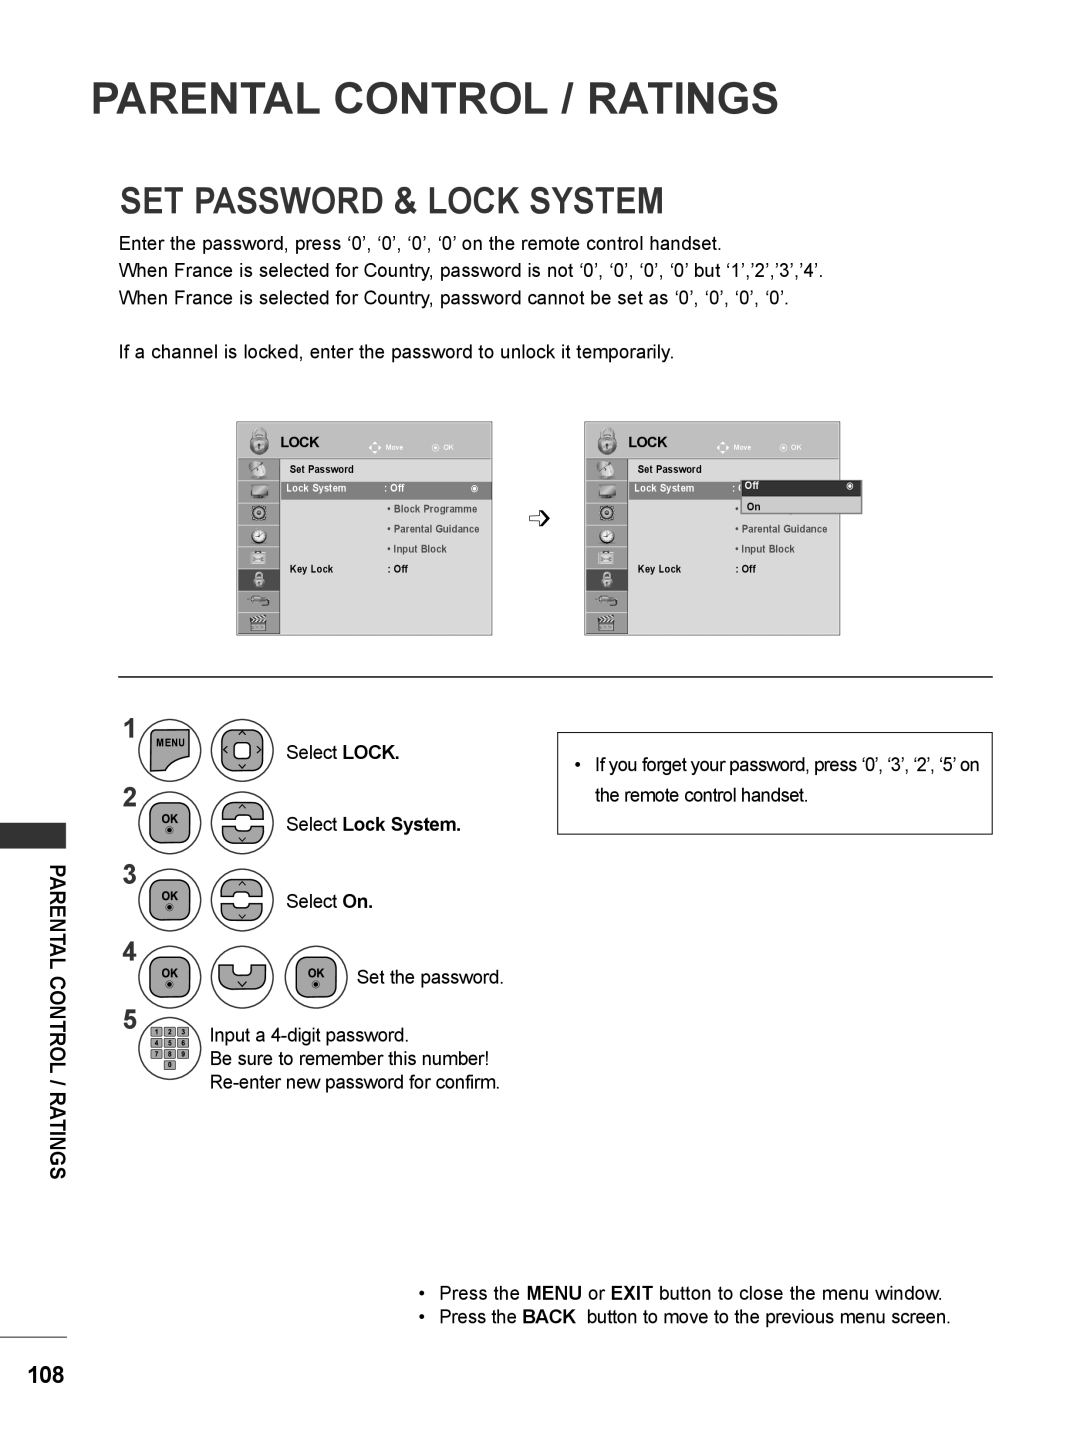 LG Electronics M2380DB, M2780DF, M2780DN, M2380DN Parental Control / Ratings, Set Password & Lock System, Select Lock System 